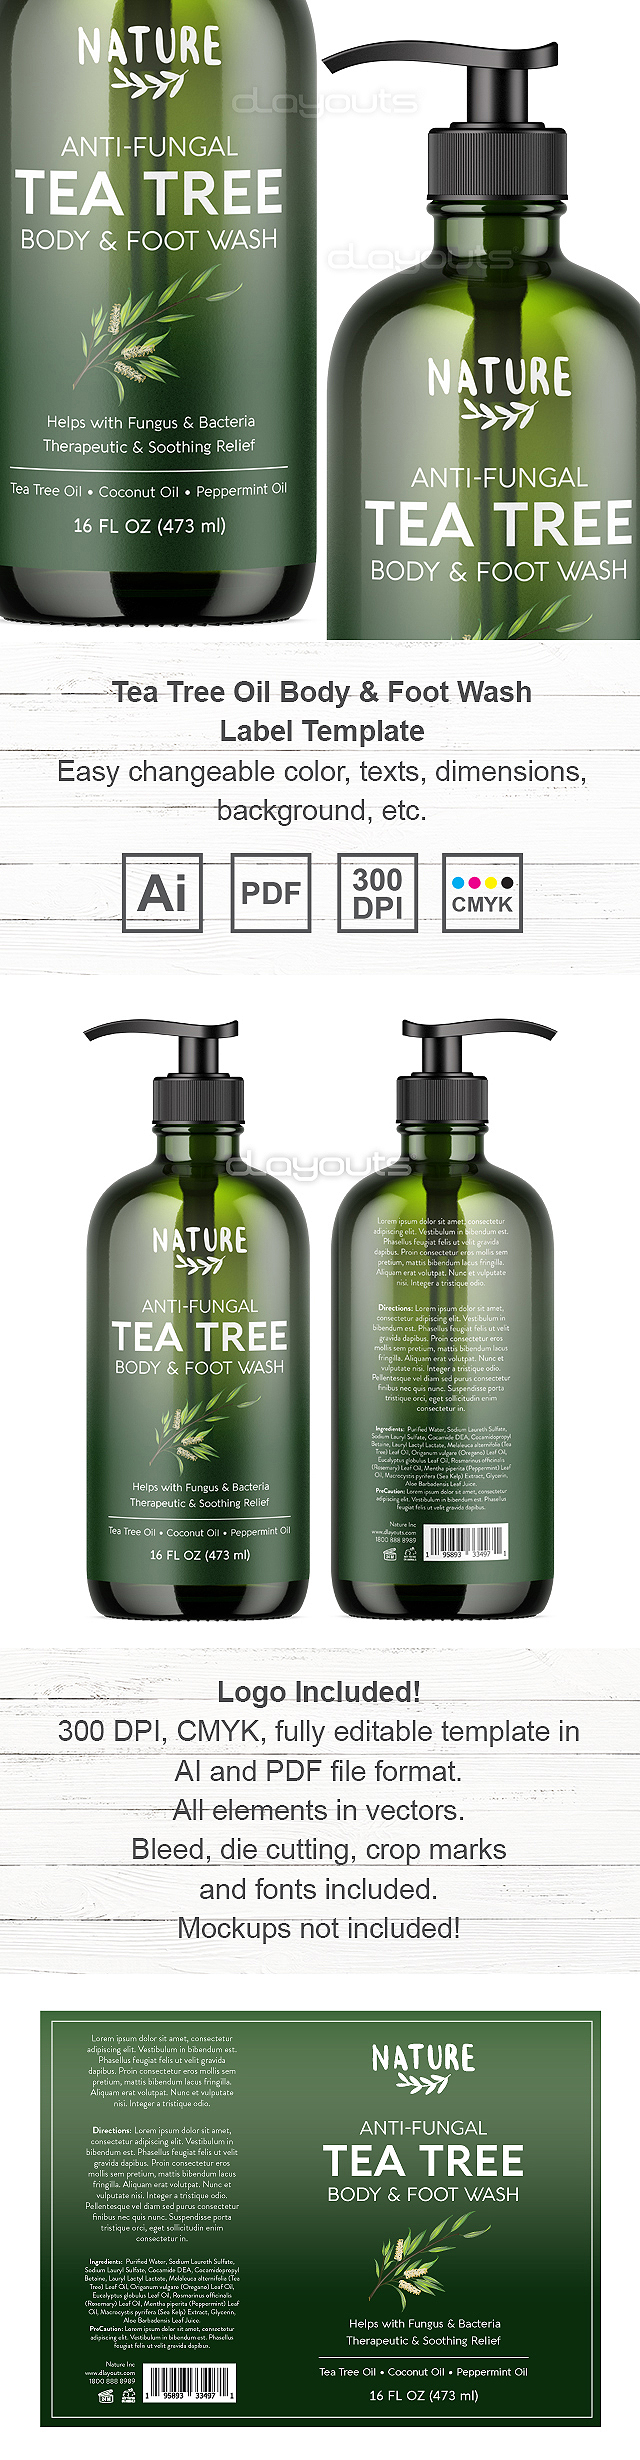 Tea Tree Oil Body & Foot Wash Label Template